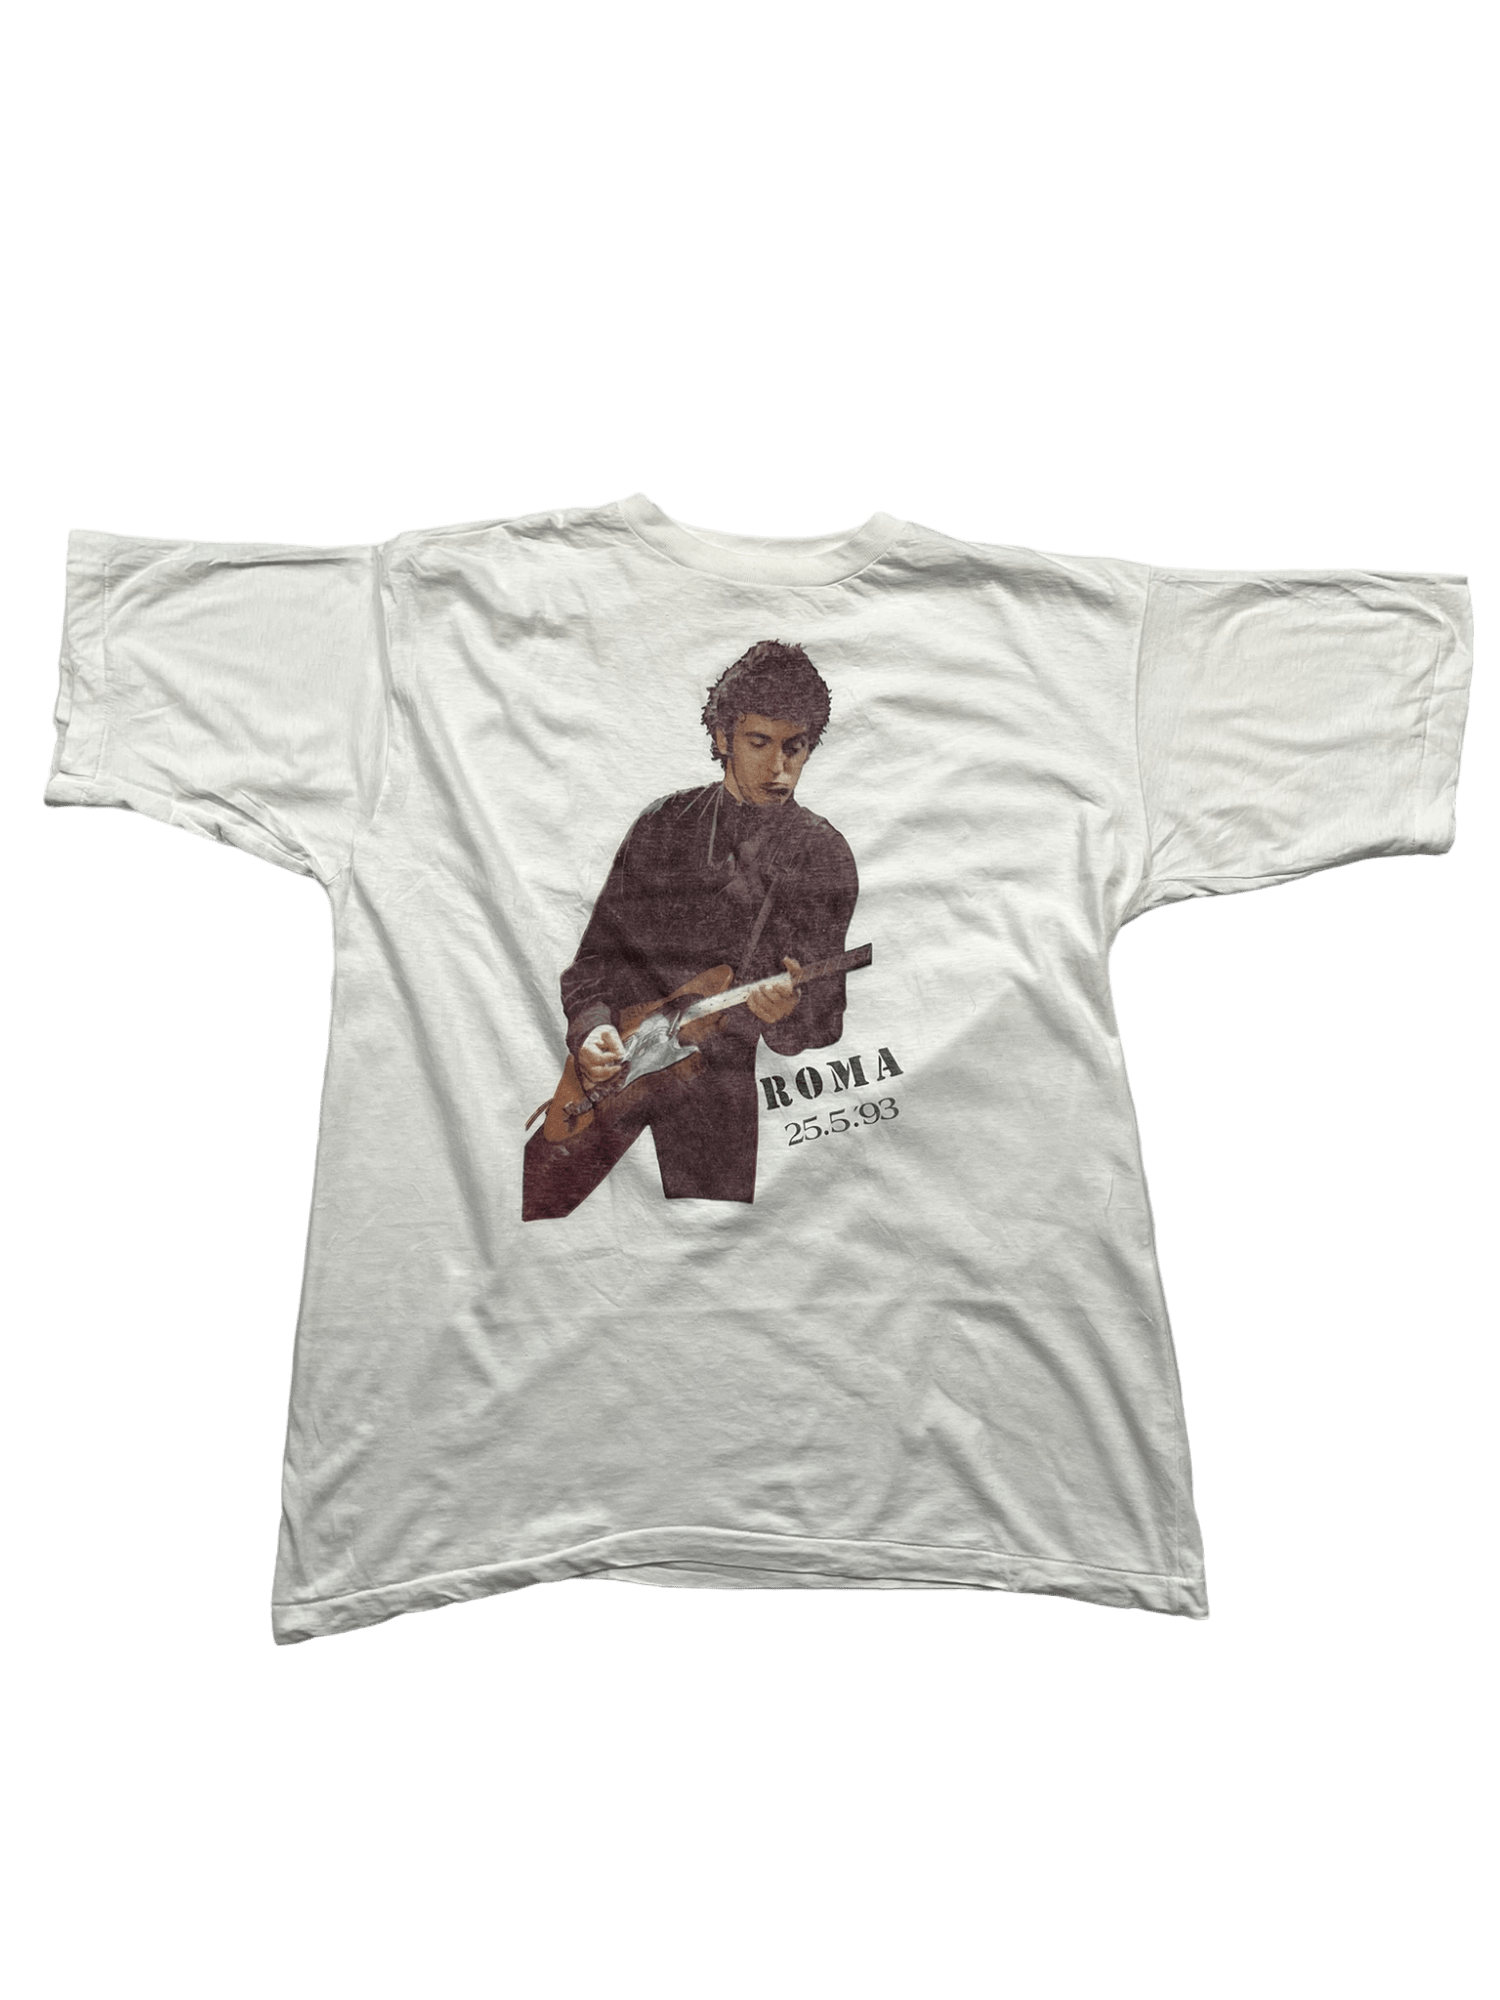 The Vintage Racks T-Shirt Bruce Springsteen - XL